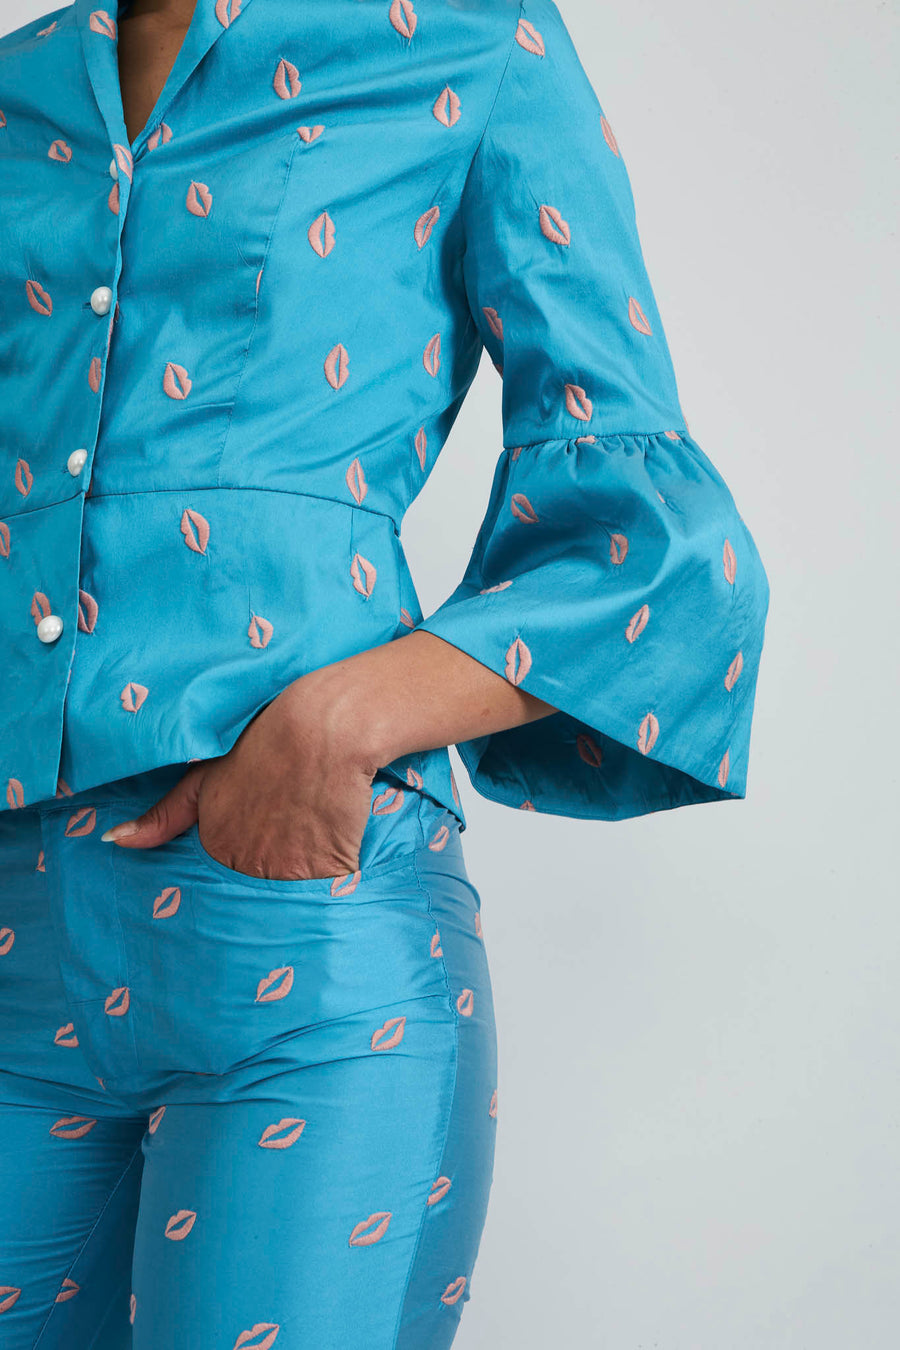 BATSHEVA - Jerri Jacket in Turquoise Taffeta with Embroidered Lips